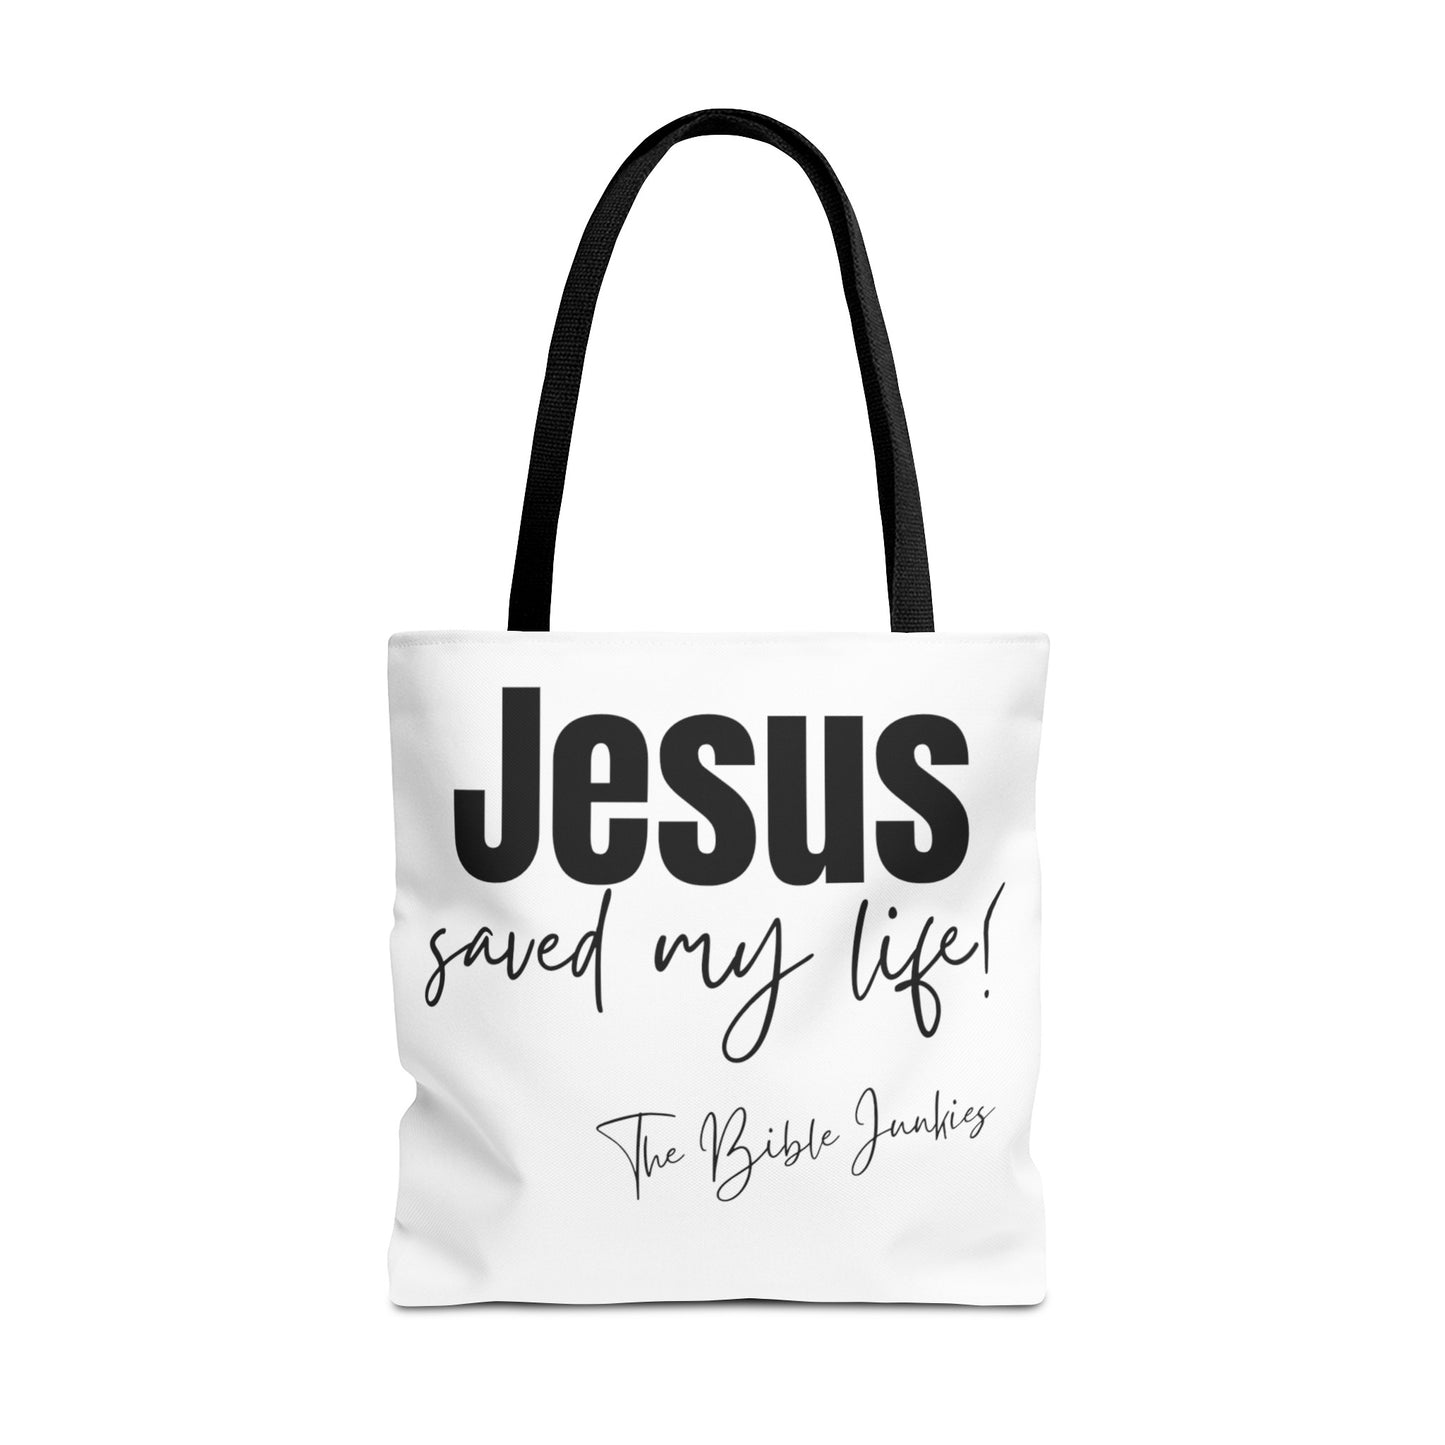 Jesus Saved My Life, Tote Bag - The Bible Junkies